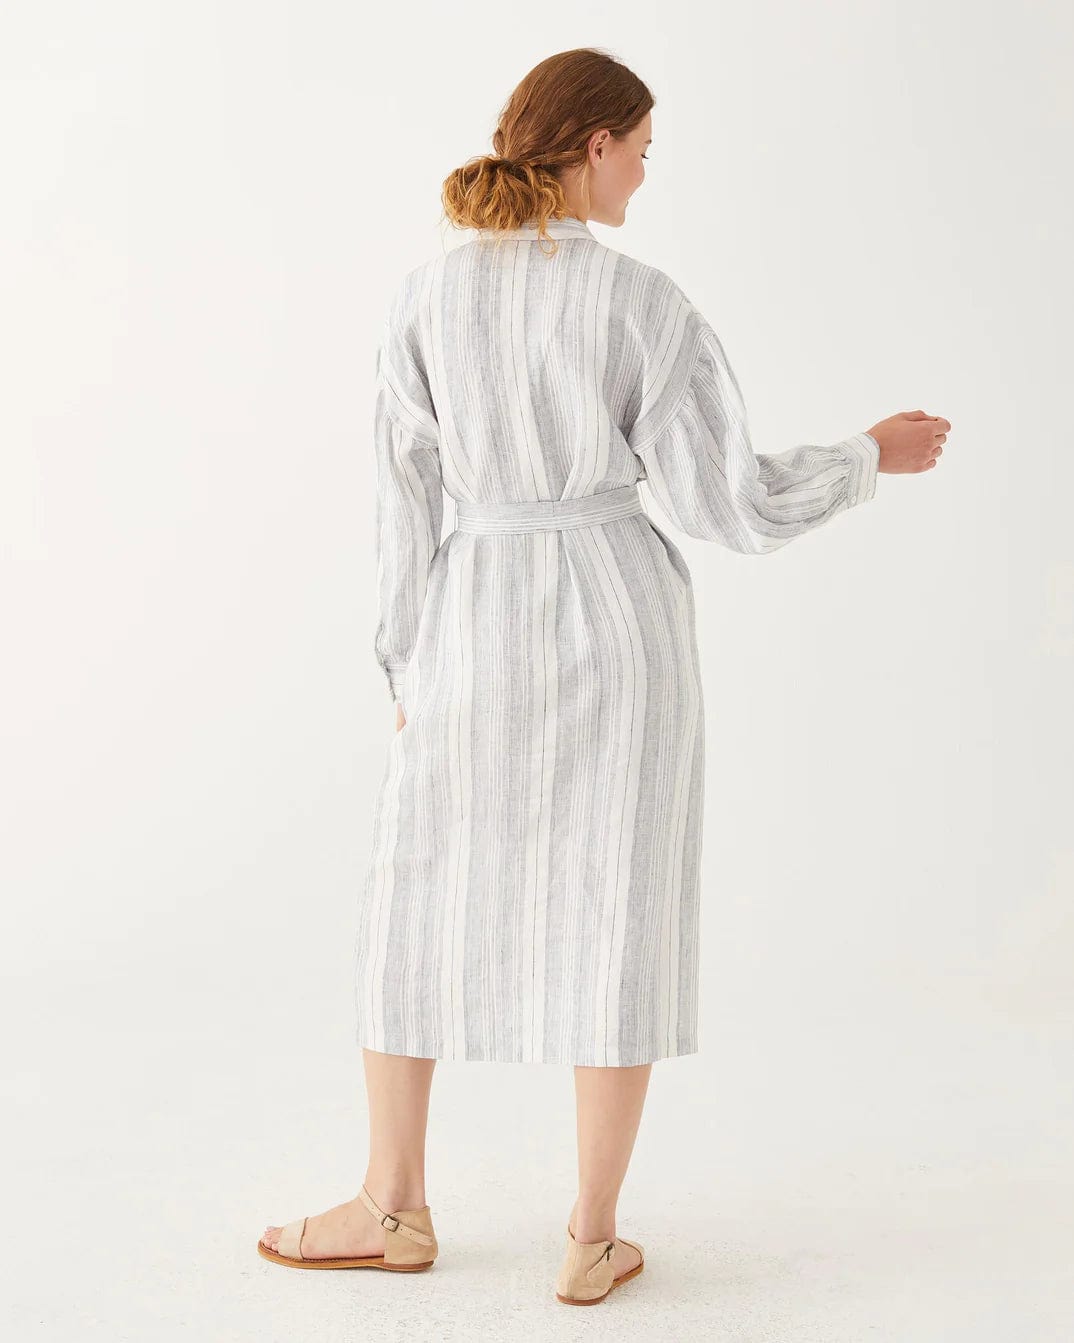 Mersea Women's Dresses Como Linen Dress